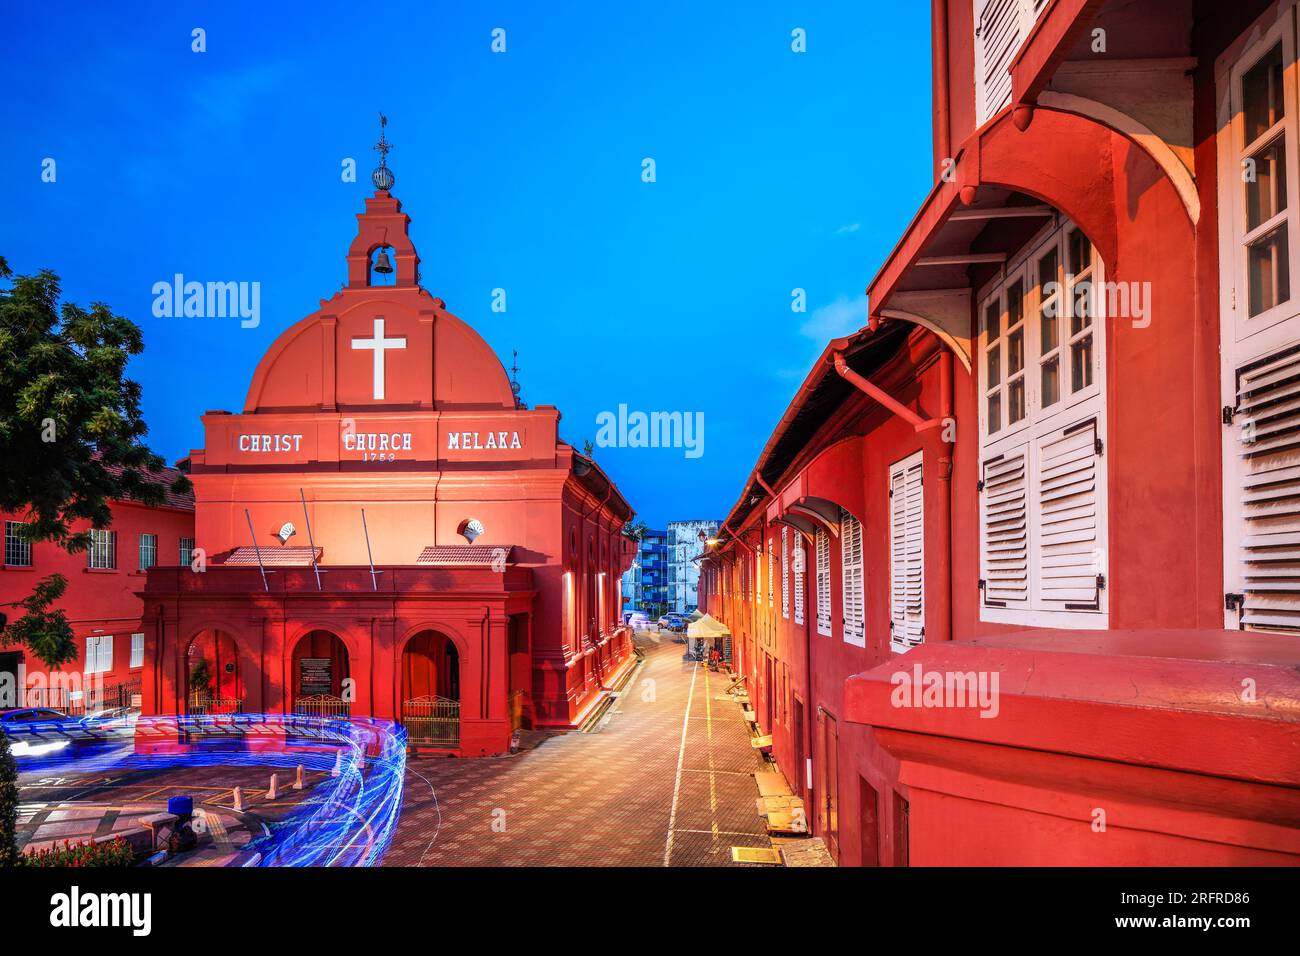 The heritage buildings of Malacca, Malaysia Stock Photo